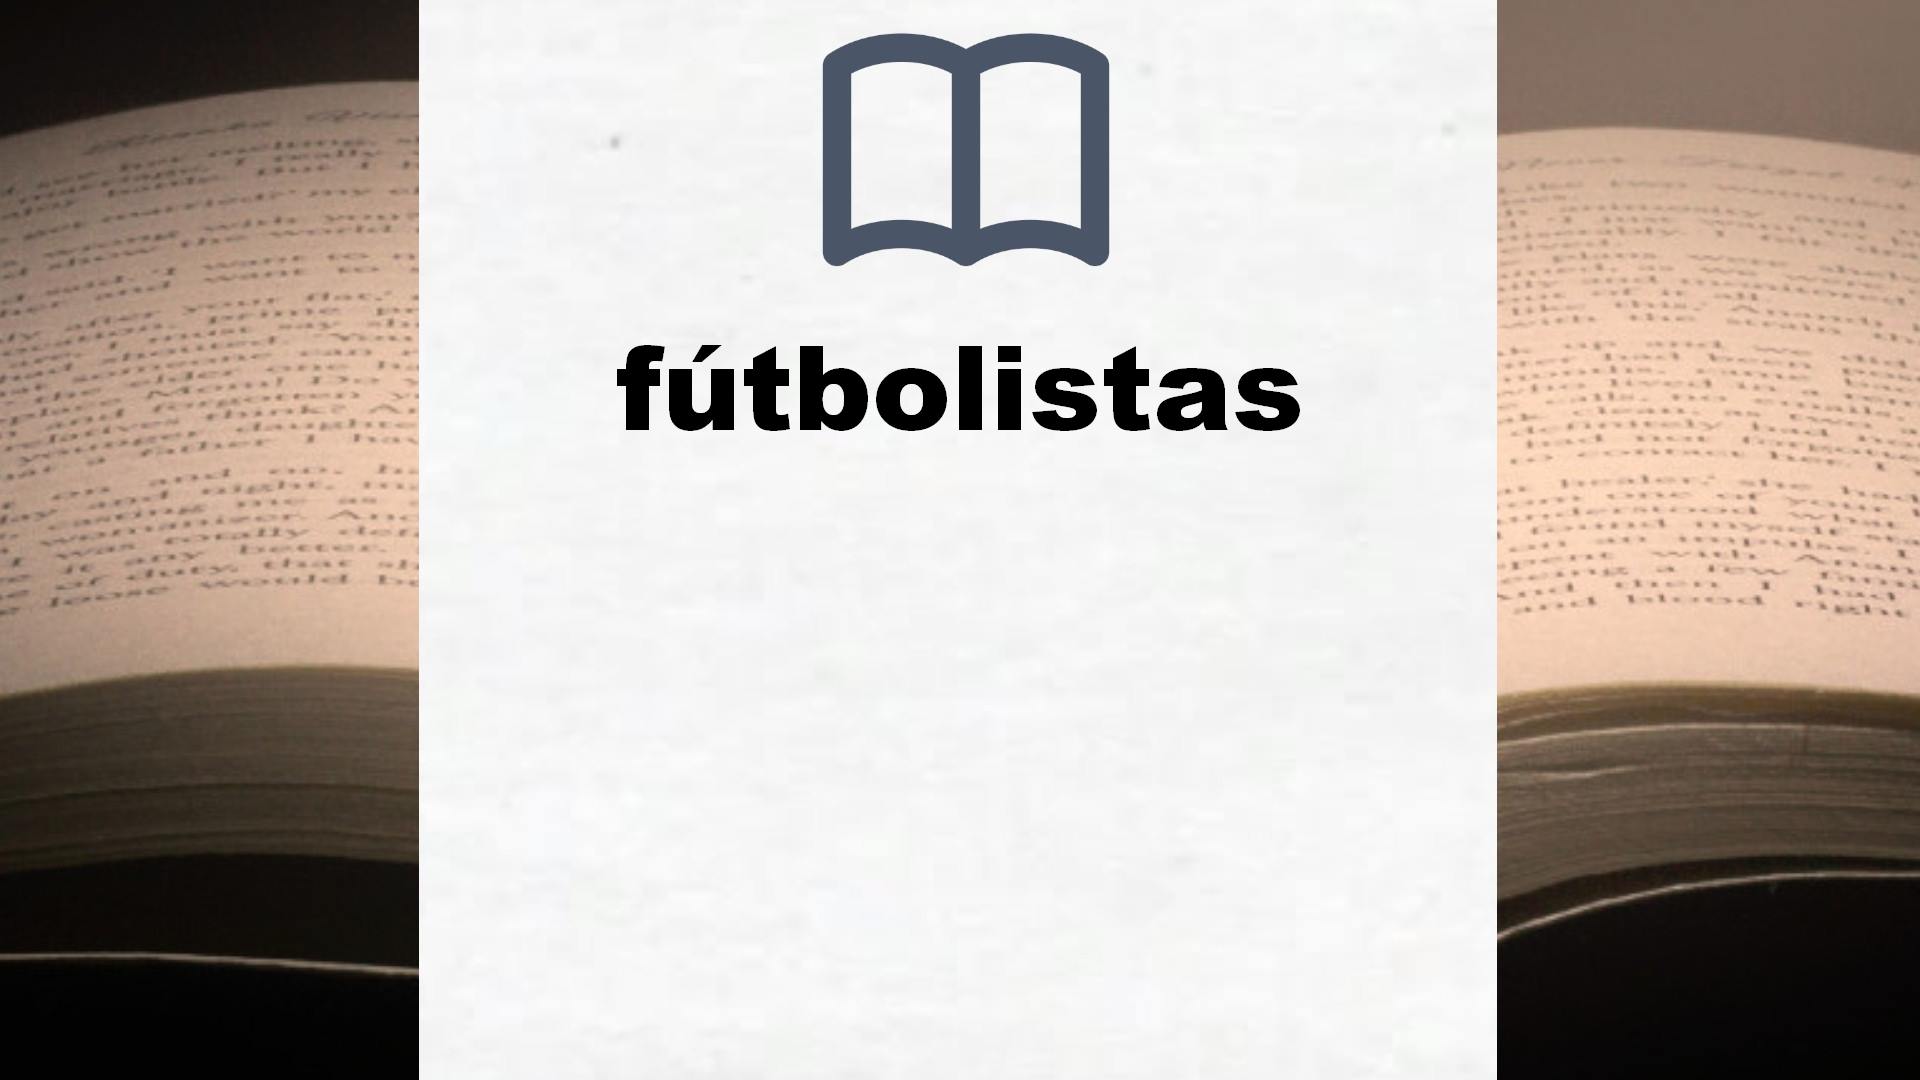 Libros sobre fútbolistas